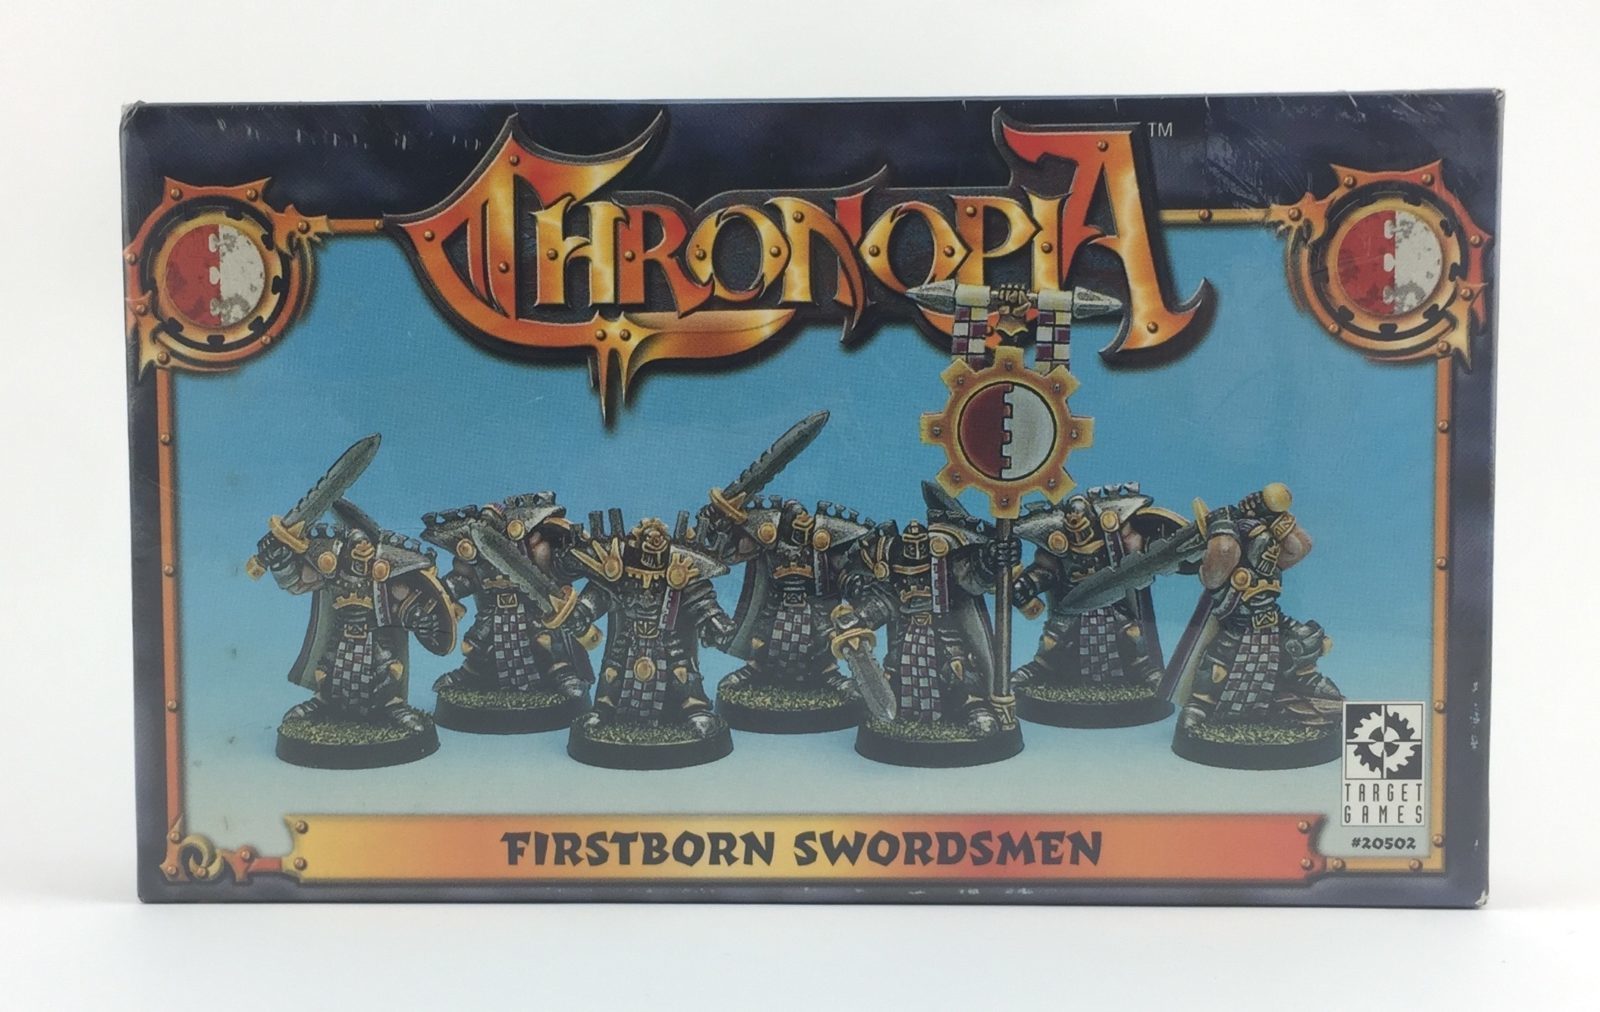 Chronopia Firstborn Swordsmen.